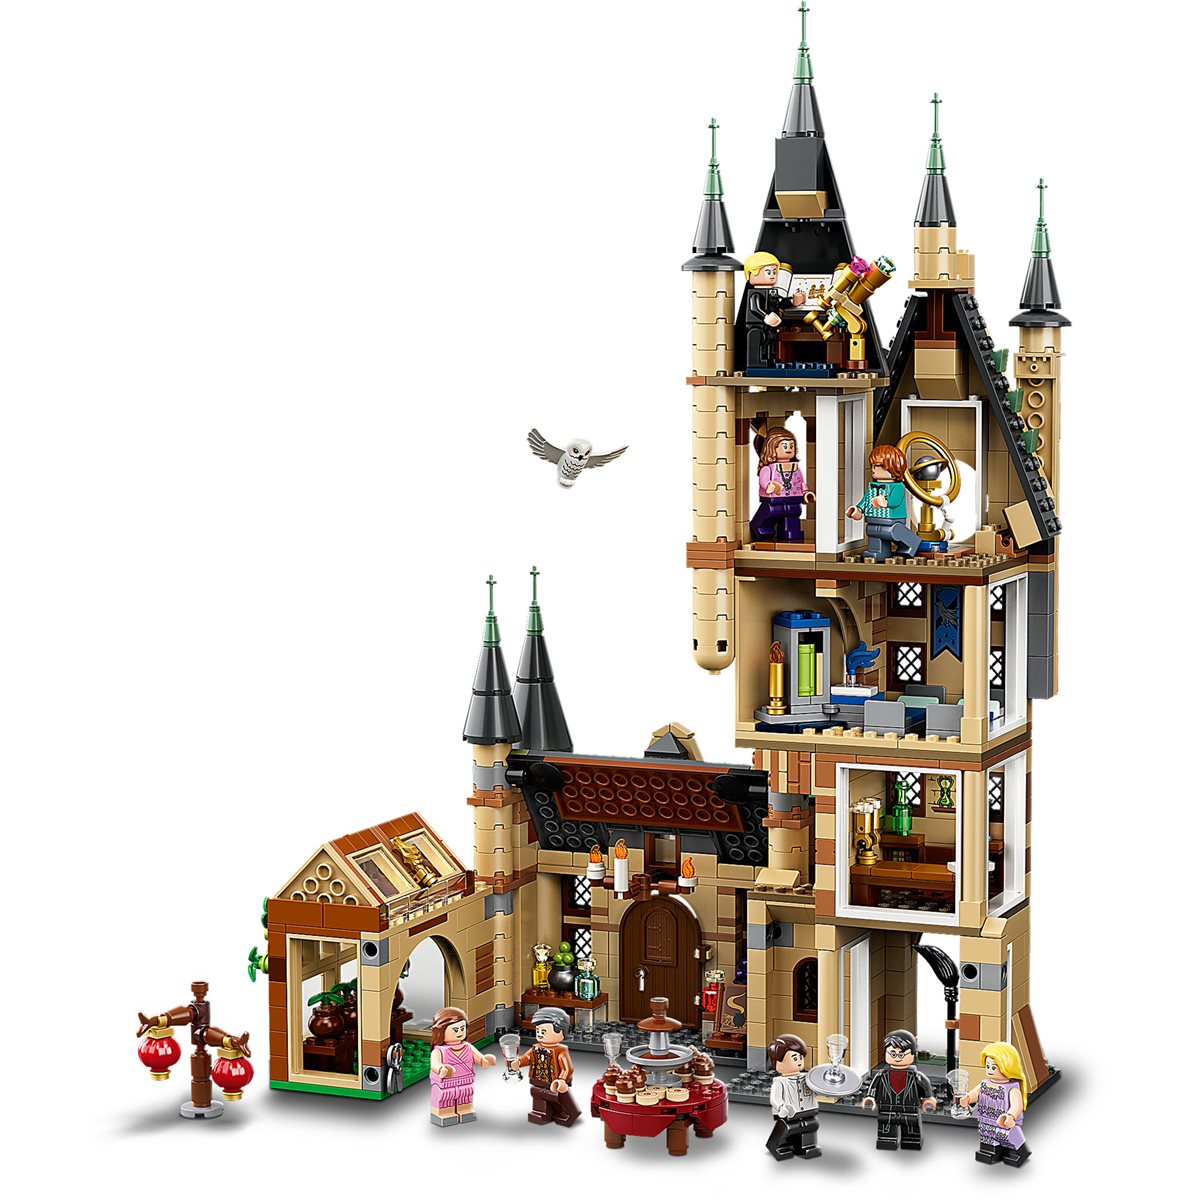 Lego 75969 - Harry Potter Hogwarts Astronomy Tower